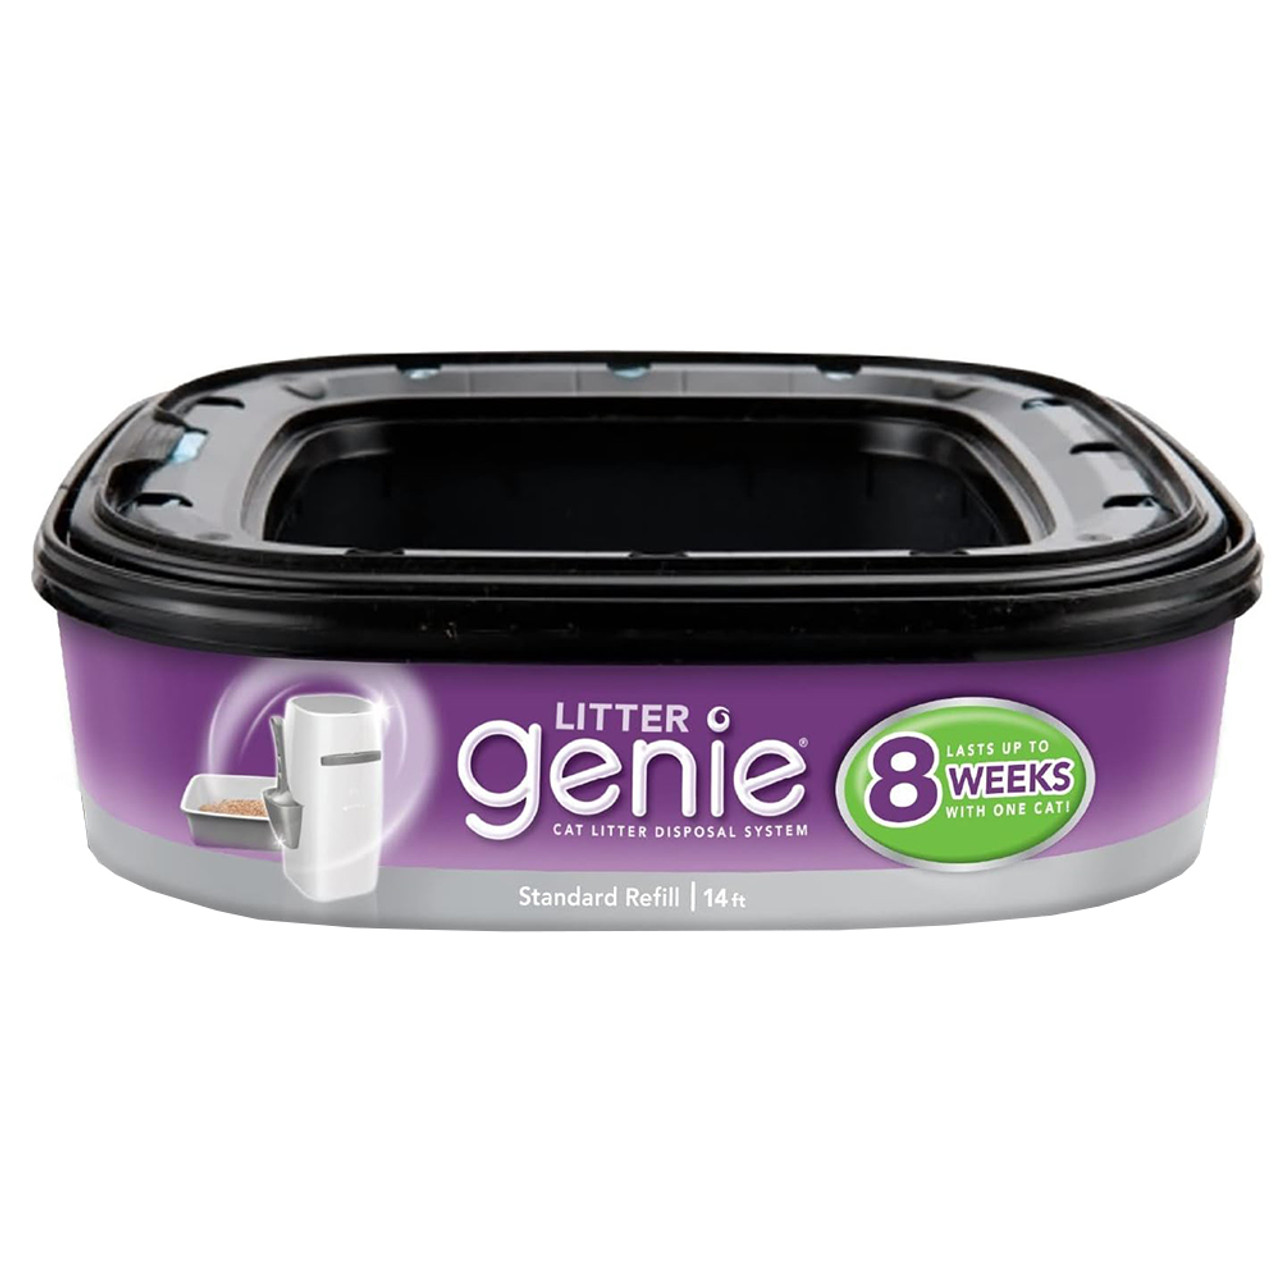 Litter Genie Standard Refill, Single Pack - Front